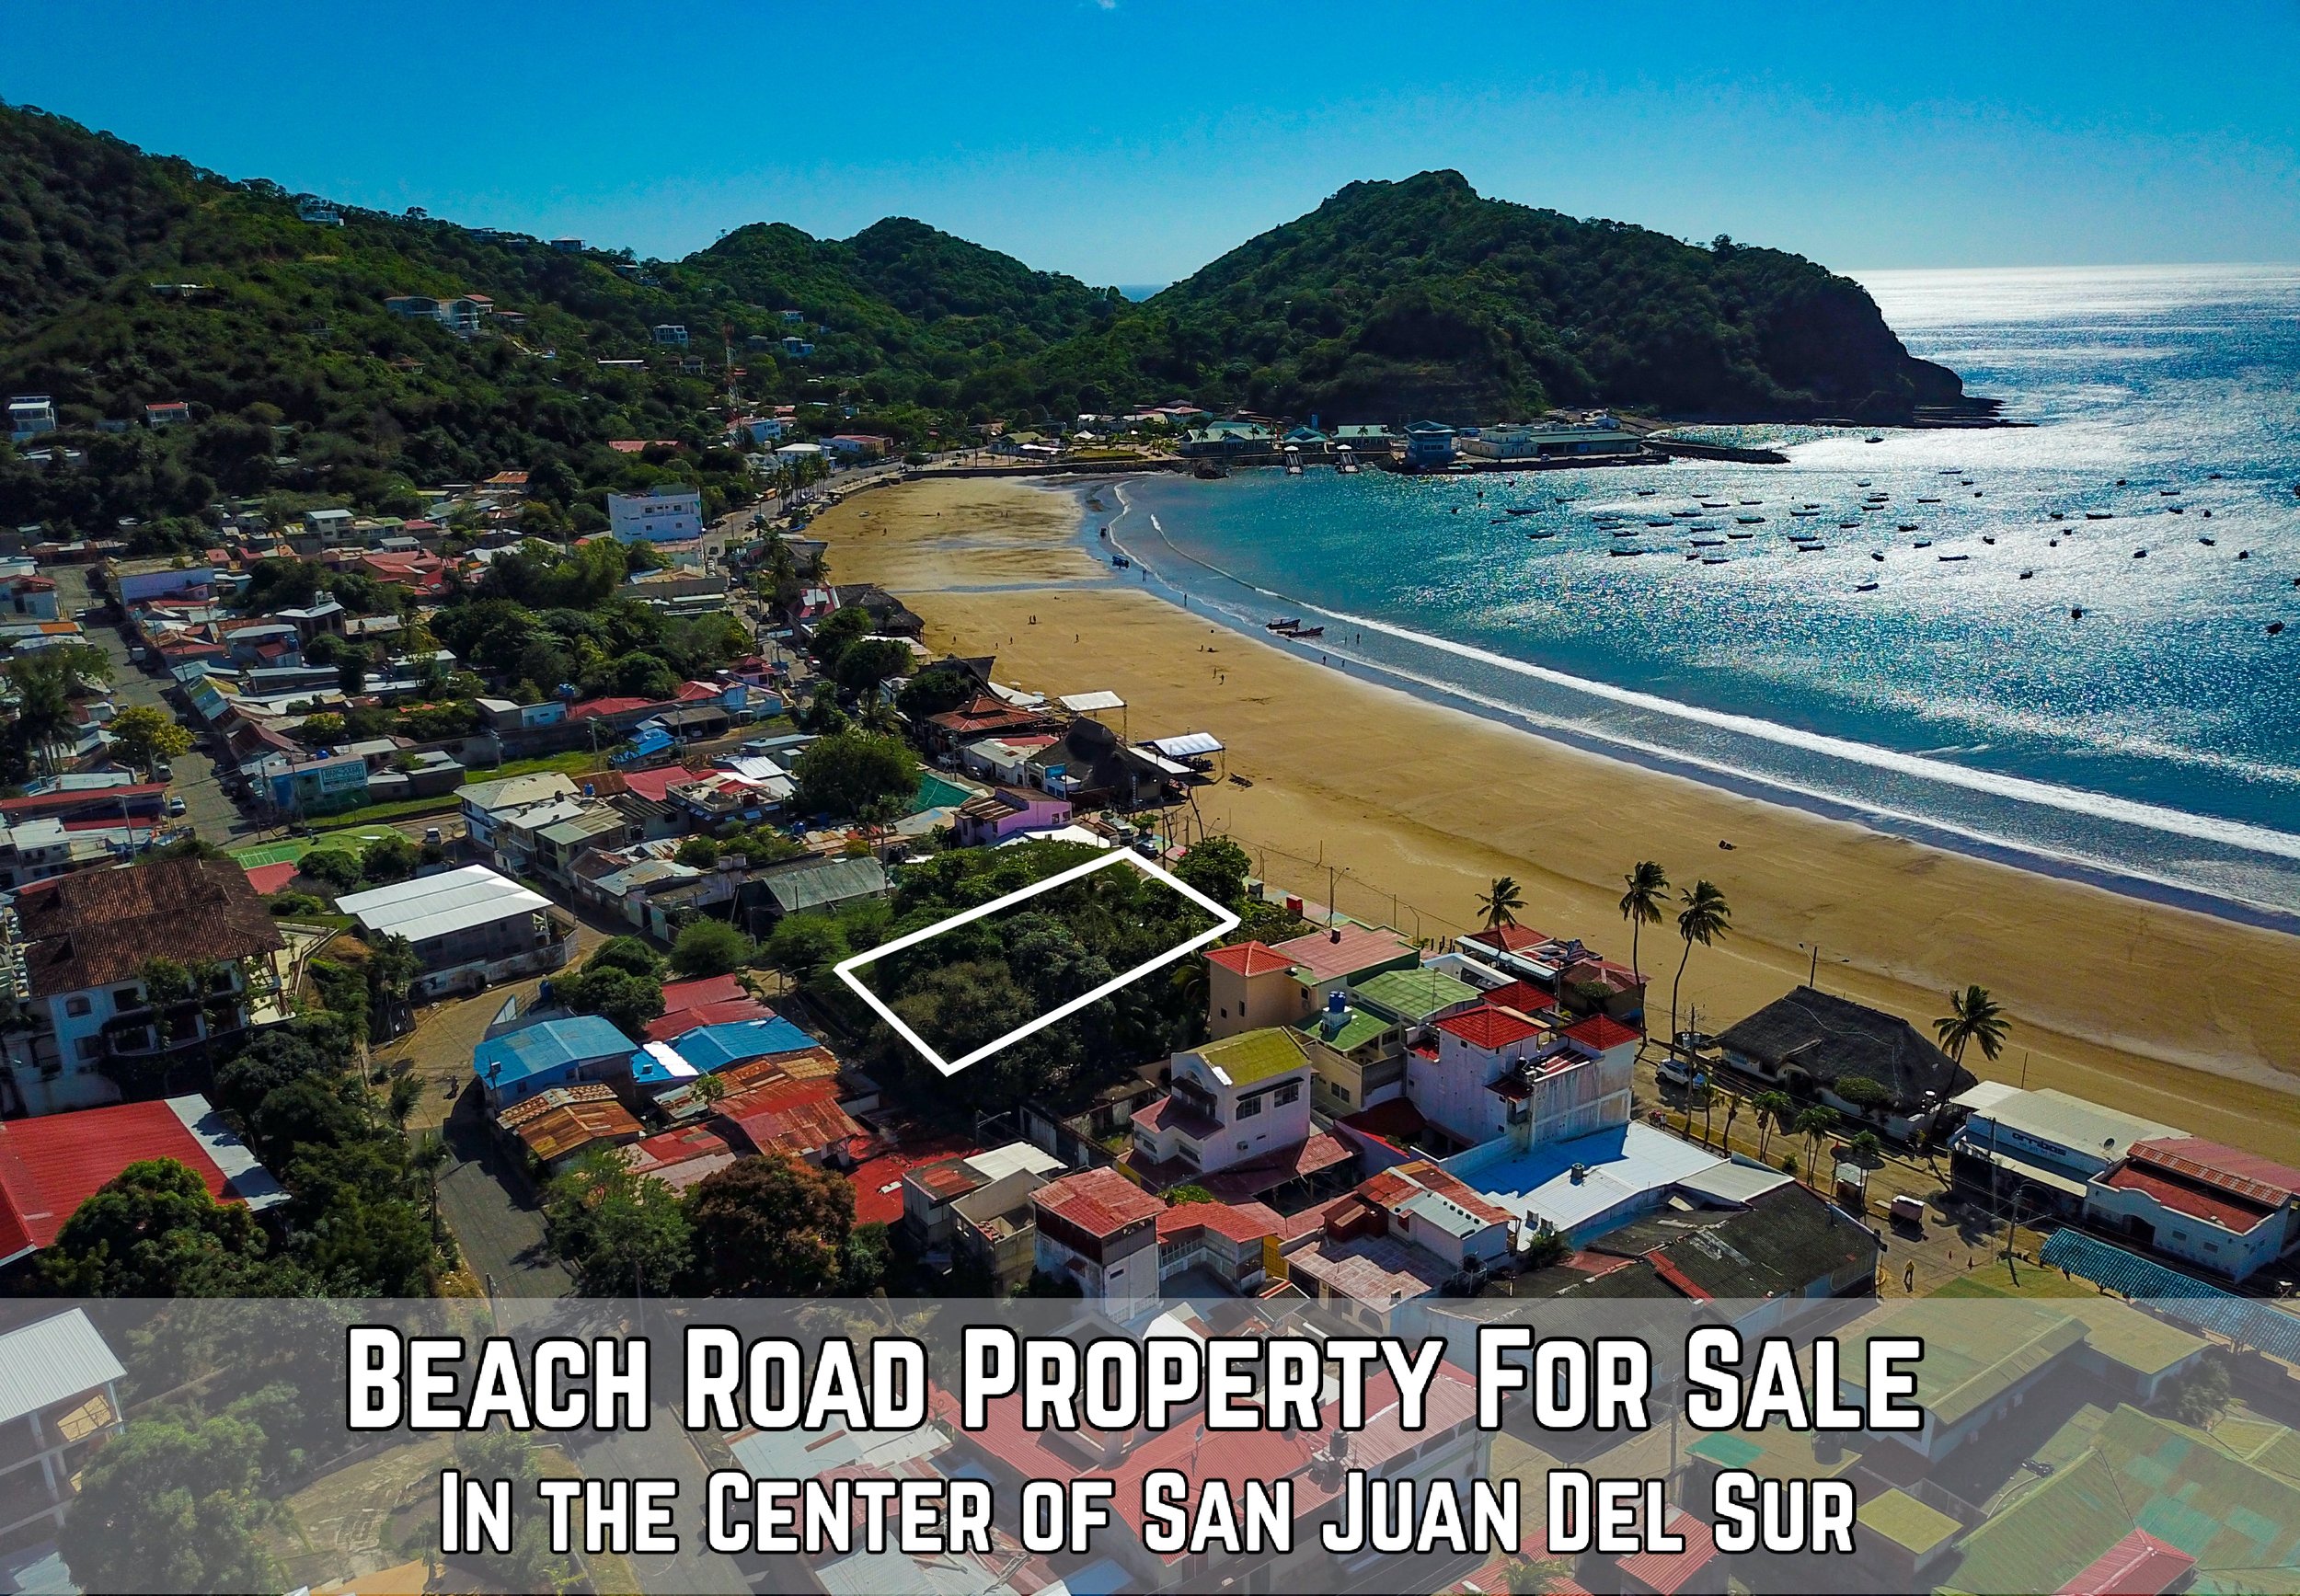 Beach Road Property San Juan Del Sur Nicaragua Beachfront for Sale-2.jpg